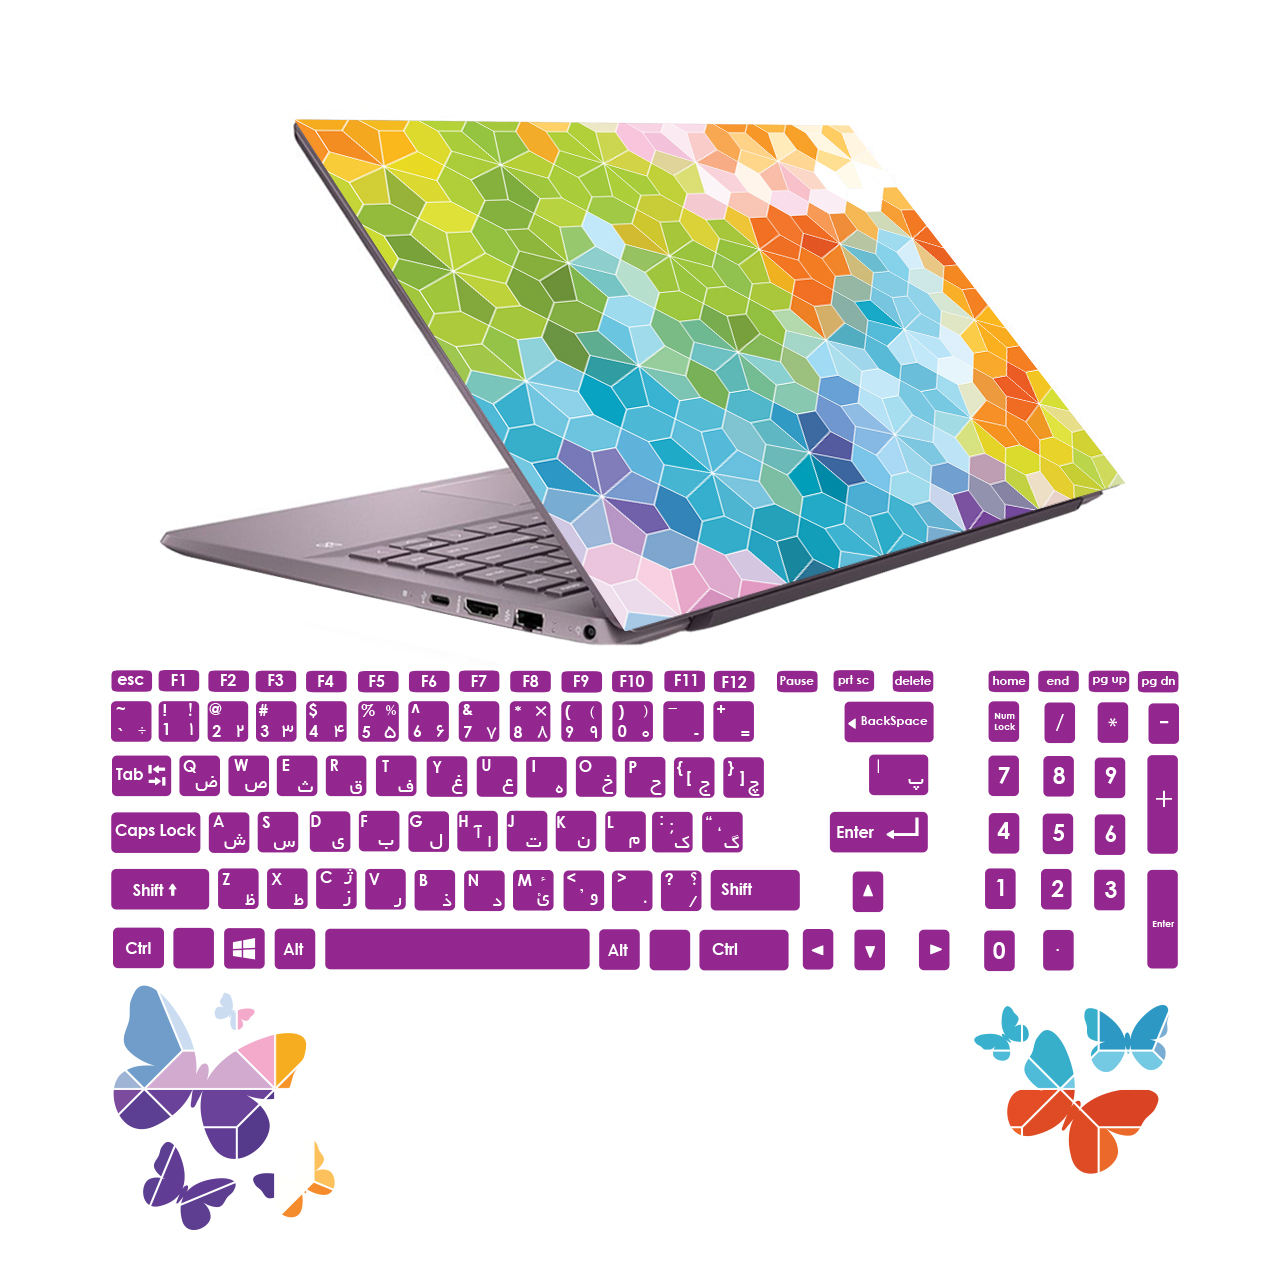 پوسته -اسکین لپ تاپ-نوت بوک -صالسو آرت استیکر لپ تاپ مدل 5019 hk با برچسب حروف فارسی کیبورد - رنگی رنگی